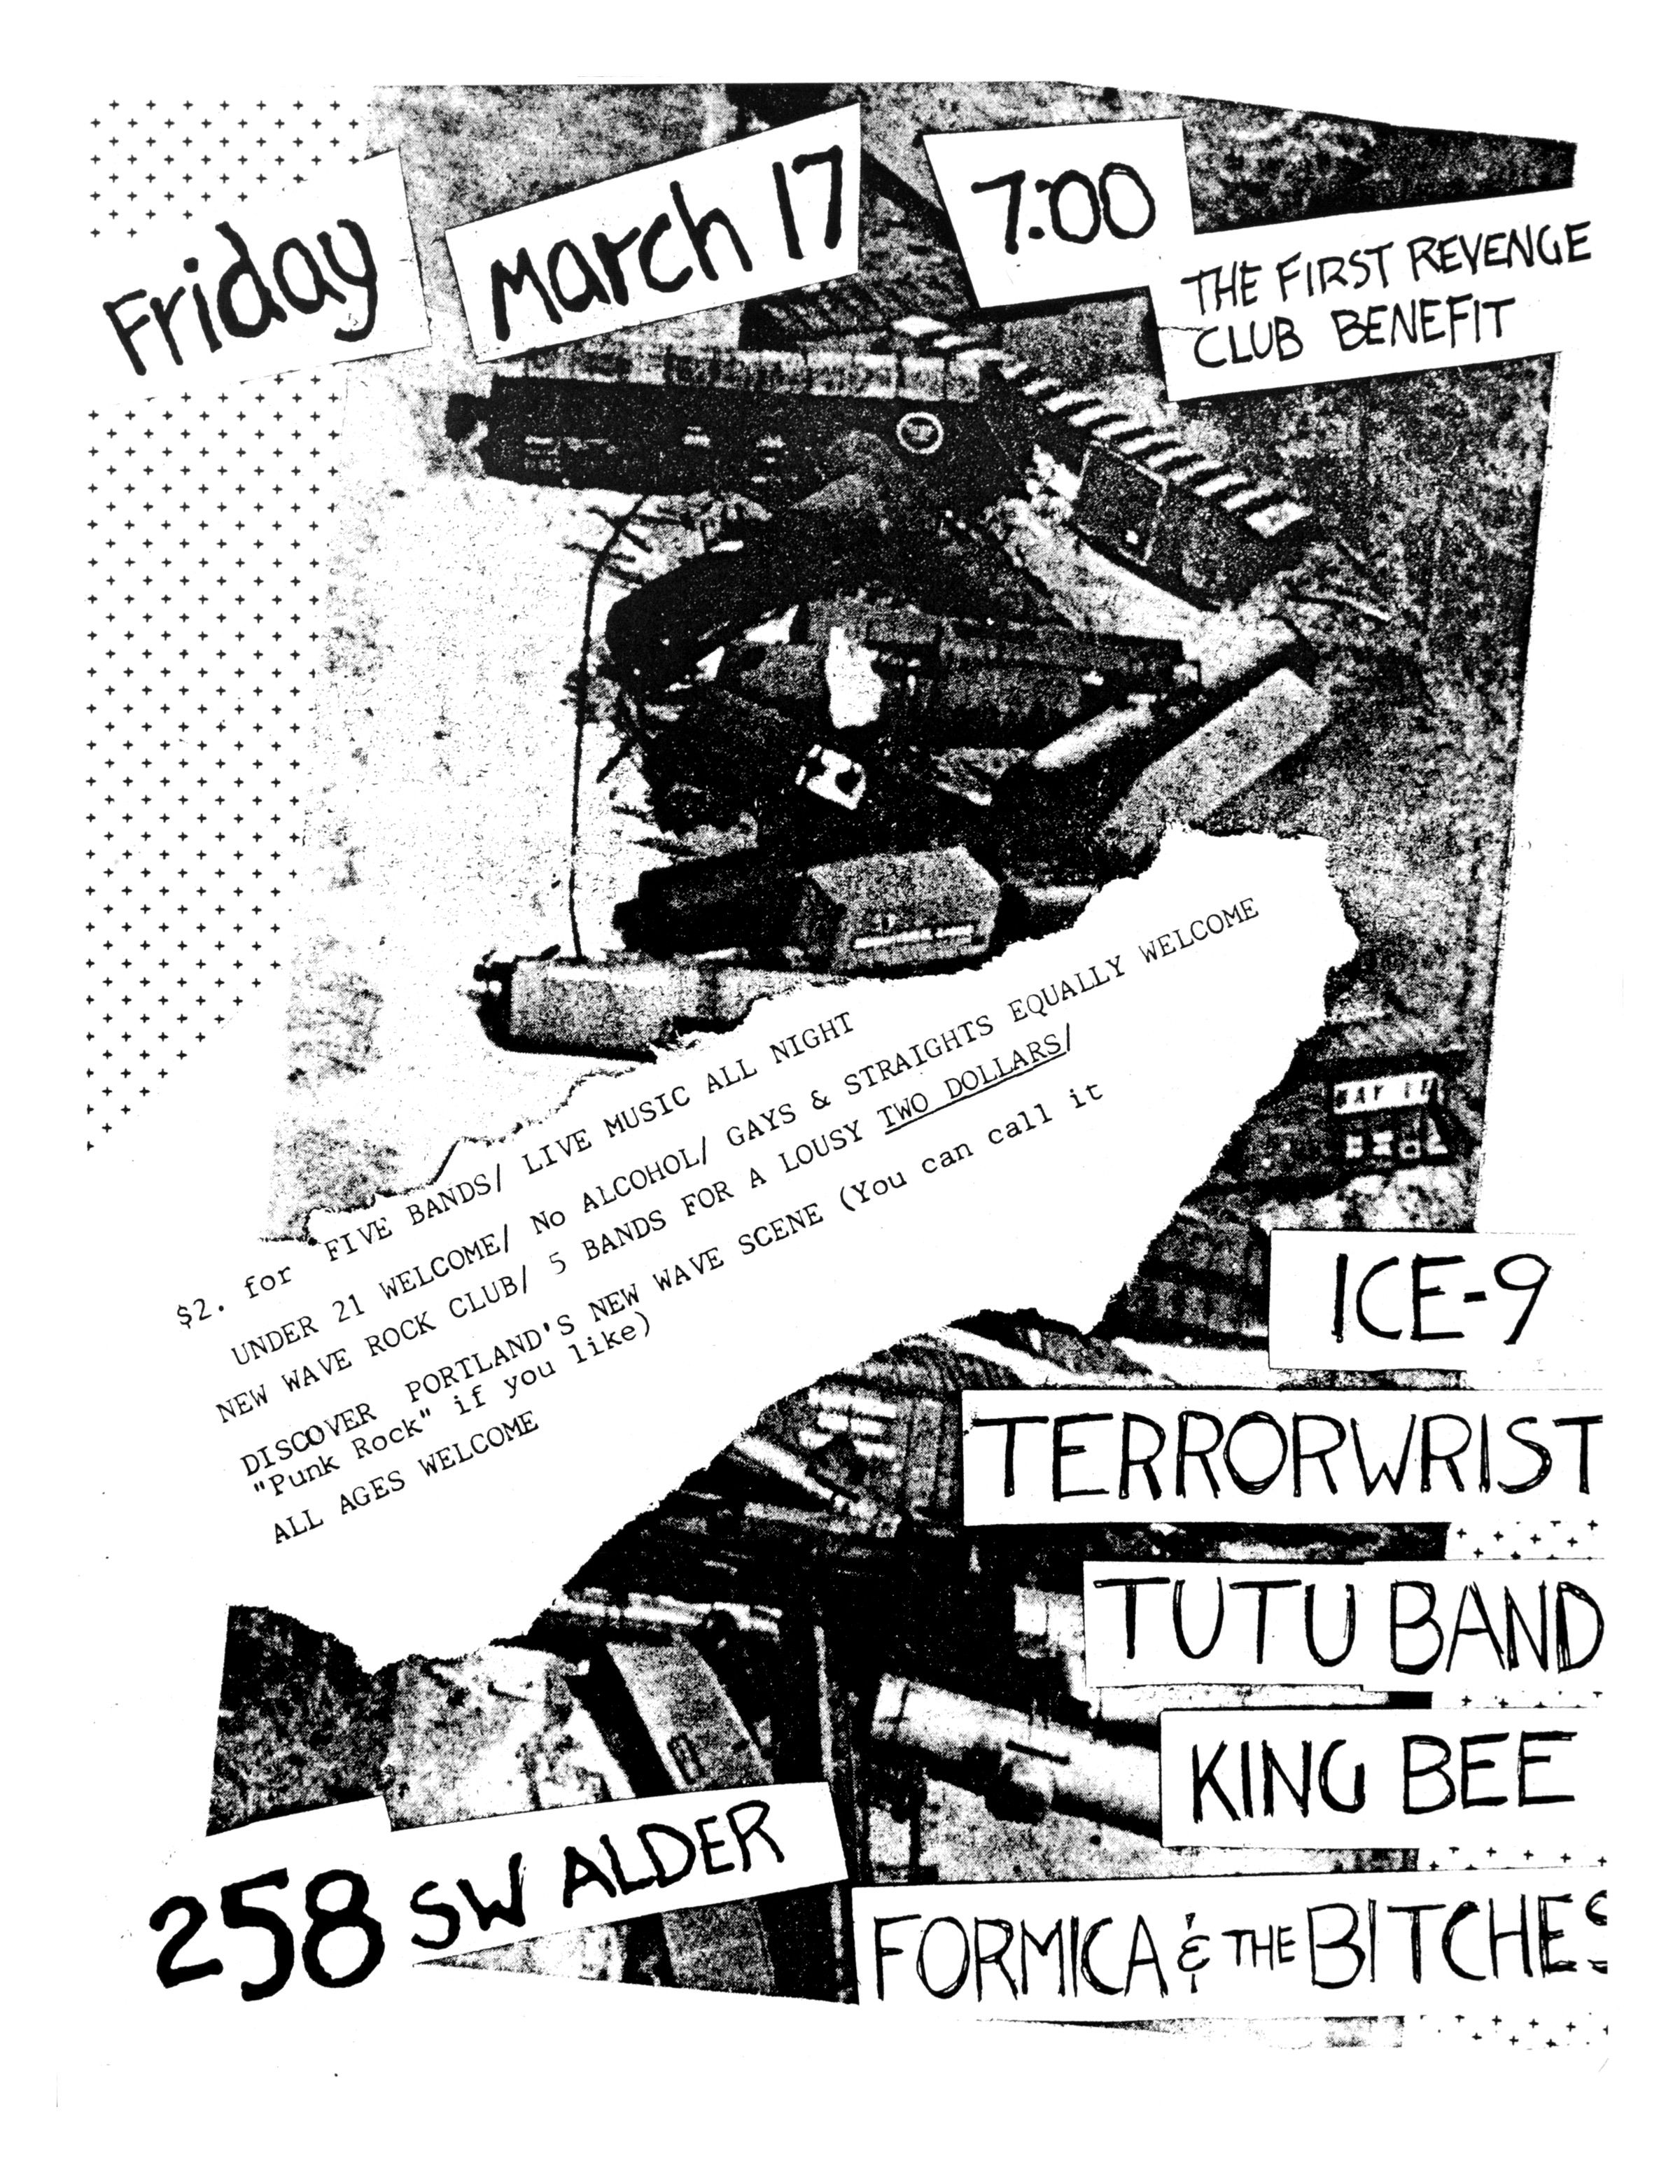 MXP-41.1 Ice-9 1979 Revenge Club Concert Poster